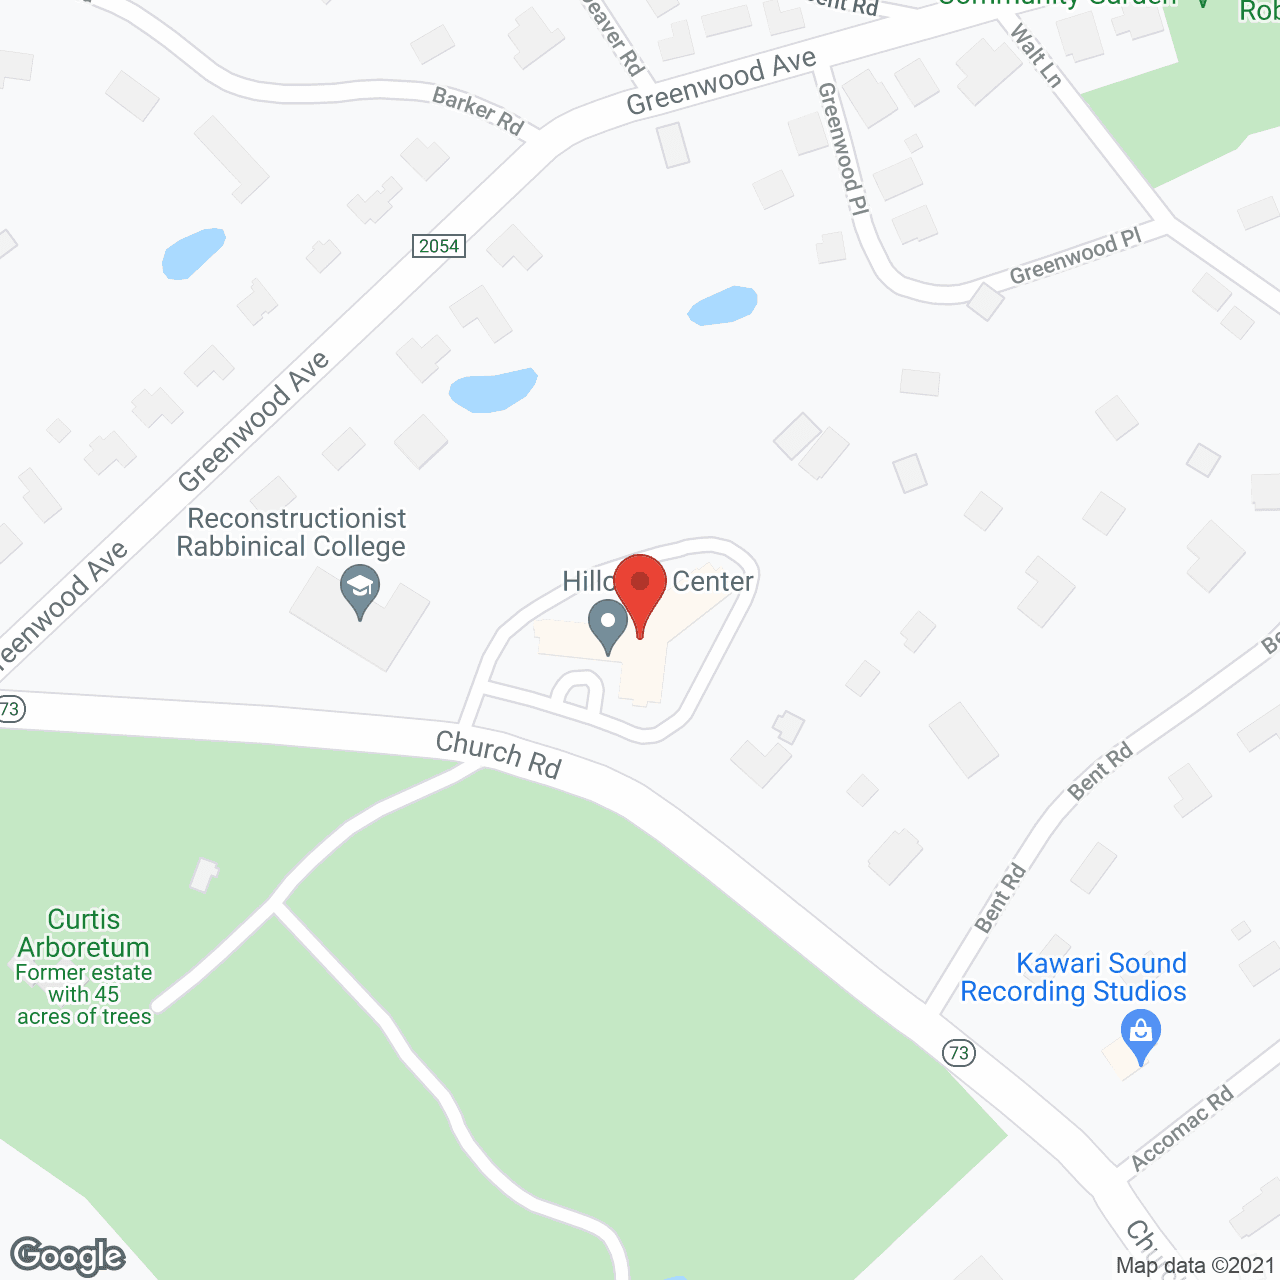 Hillcrest Center in google map